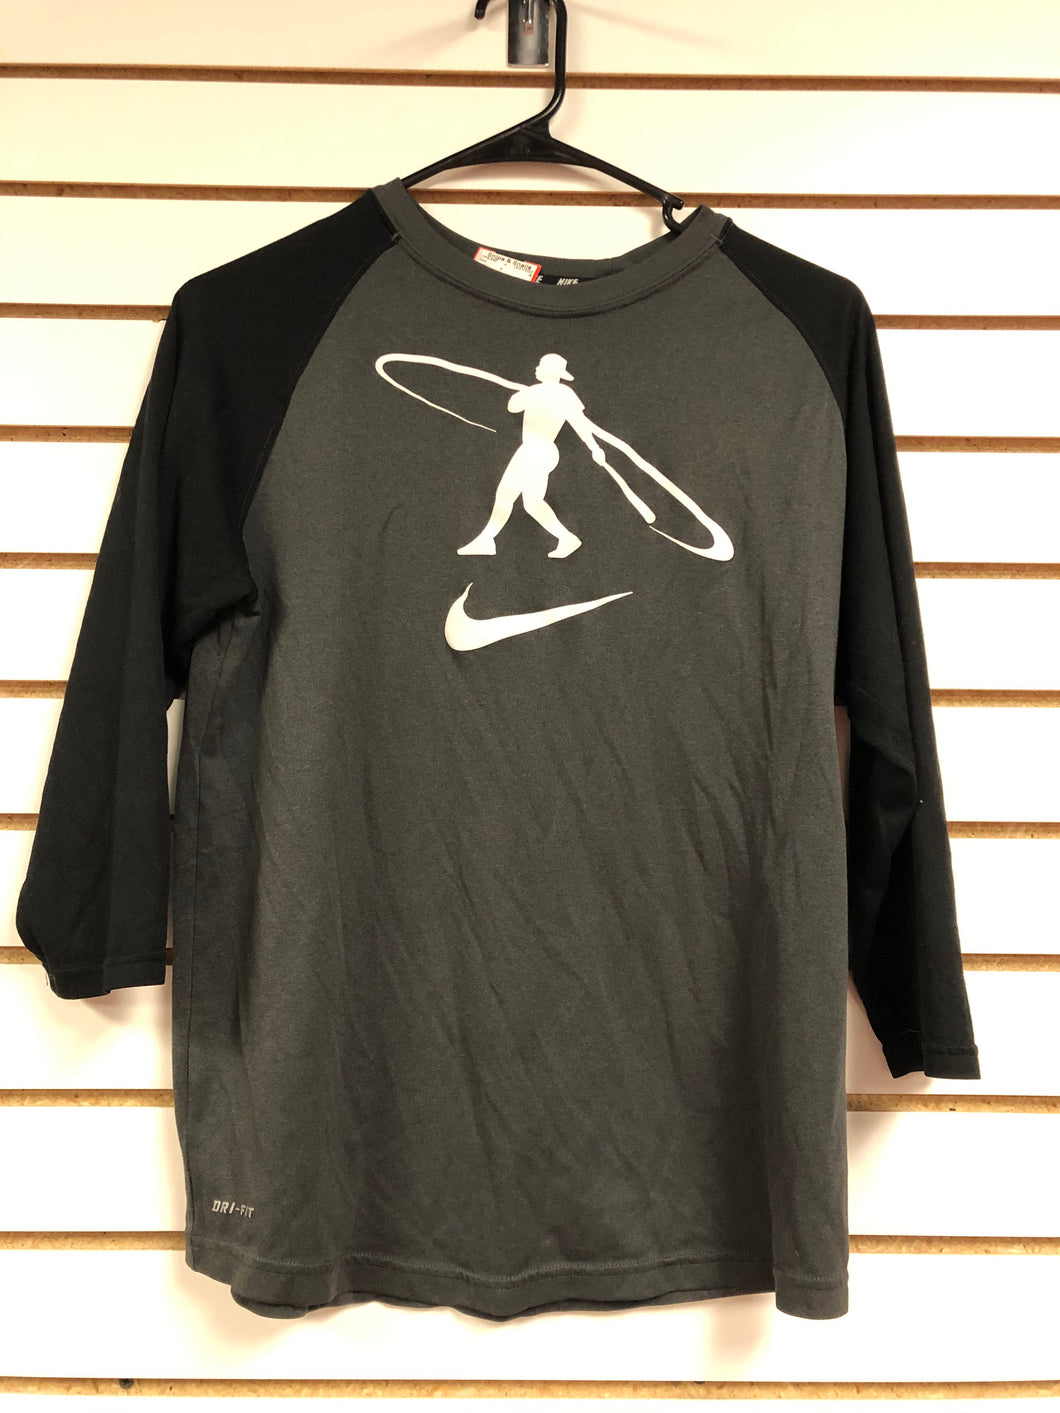 Boys XL Nike dri-fit Shirt